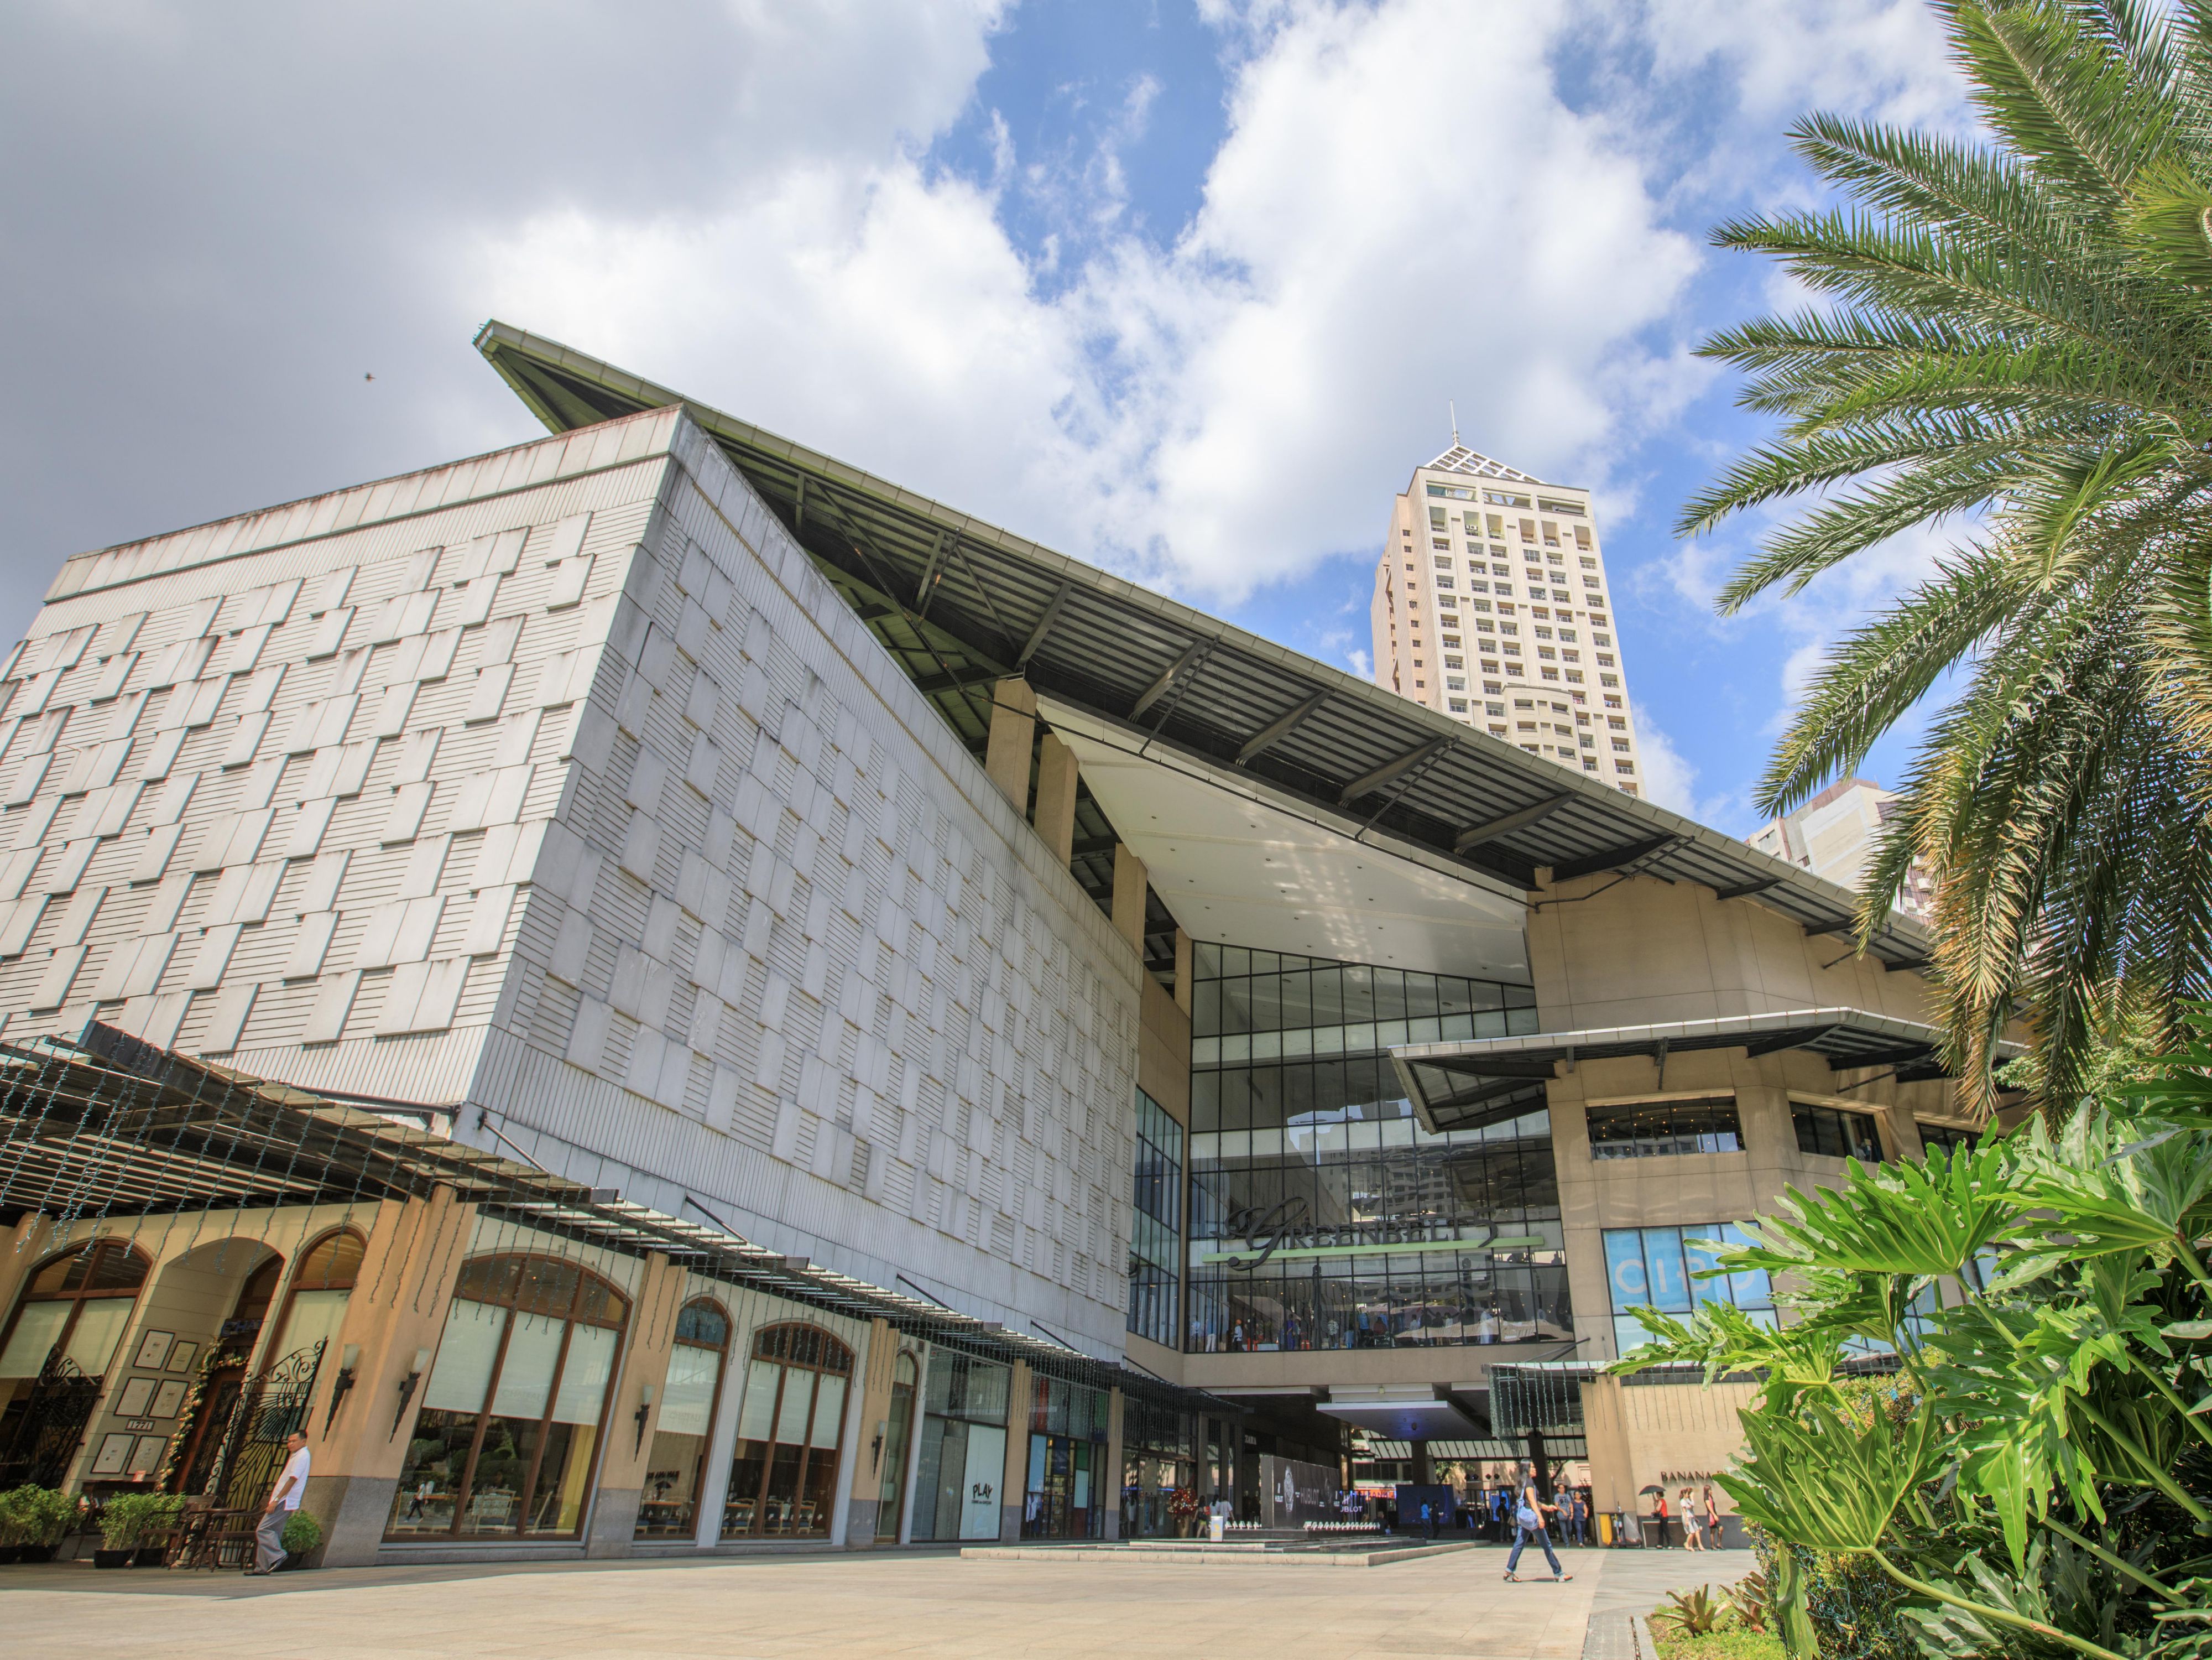 Take a leisurely stroll in Makati's Greenbelt Mall